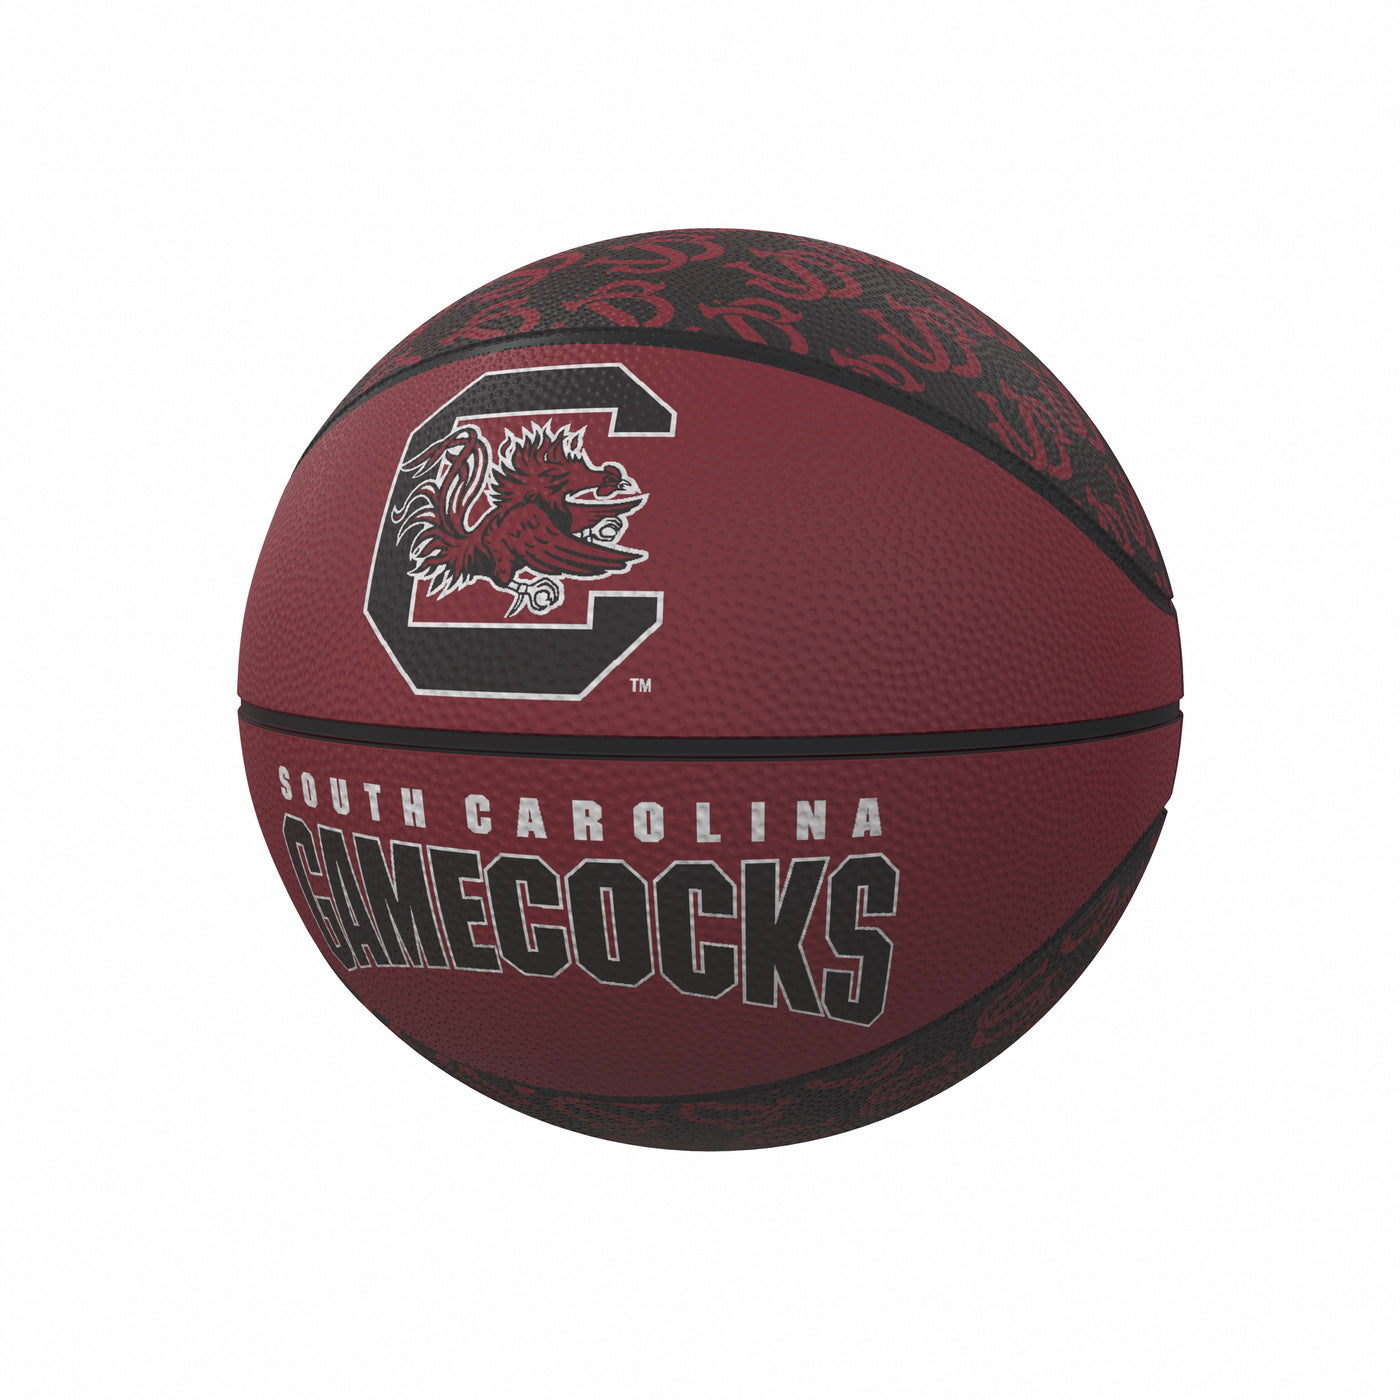 South Carolina Repeating Logo Mini-Size Rubber Basketball